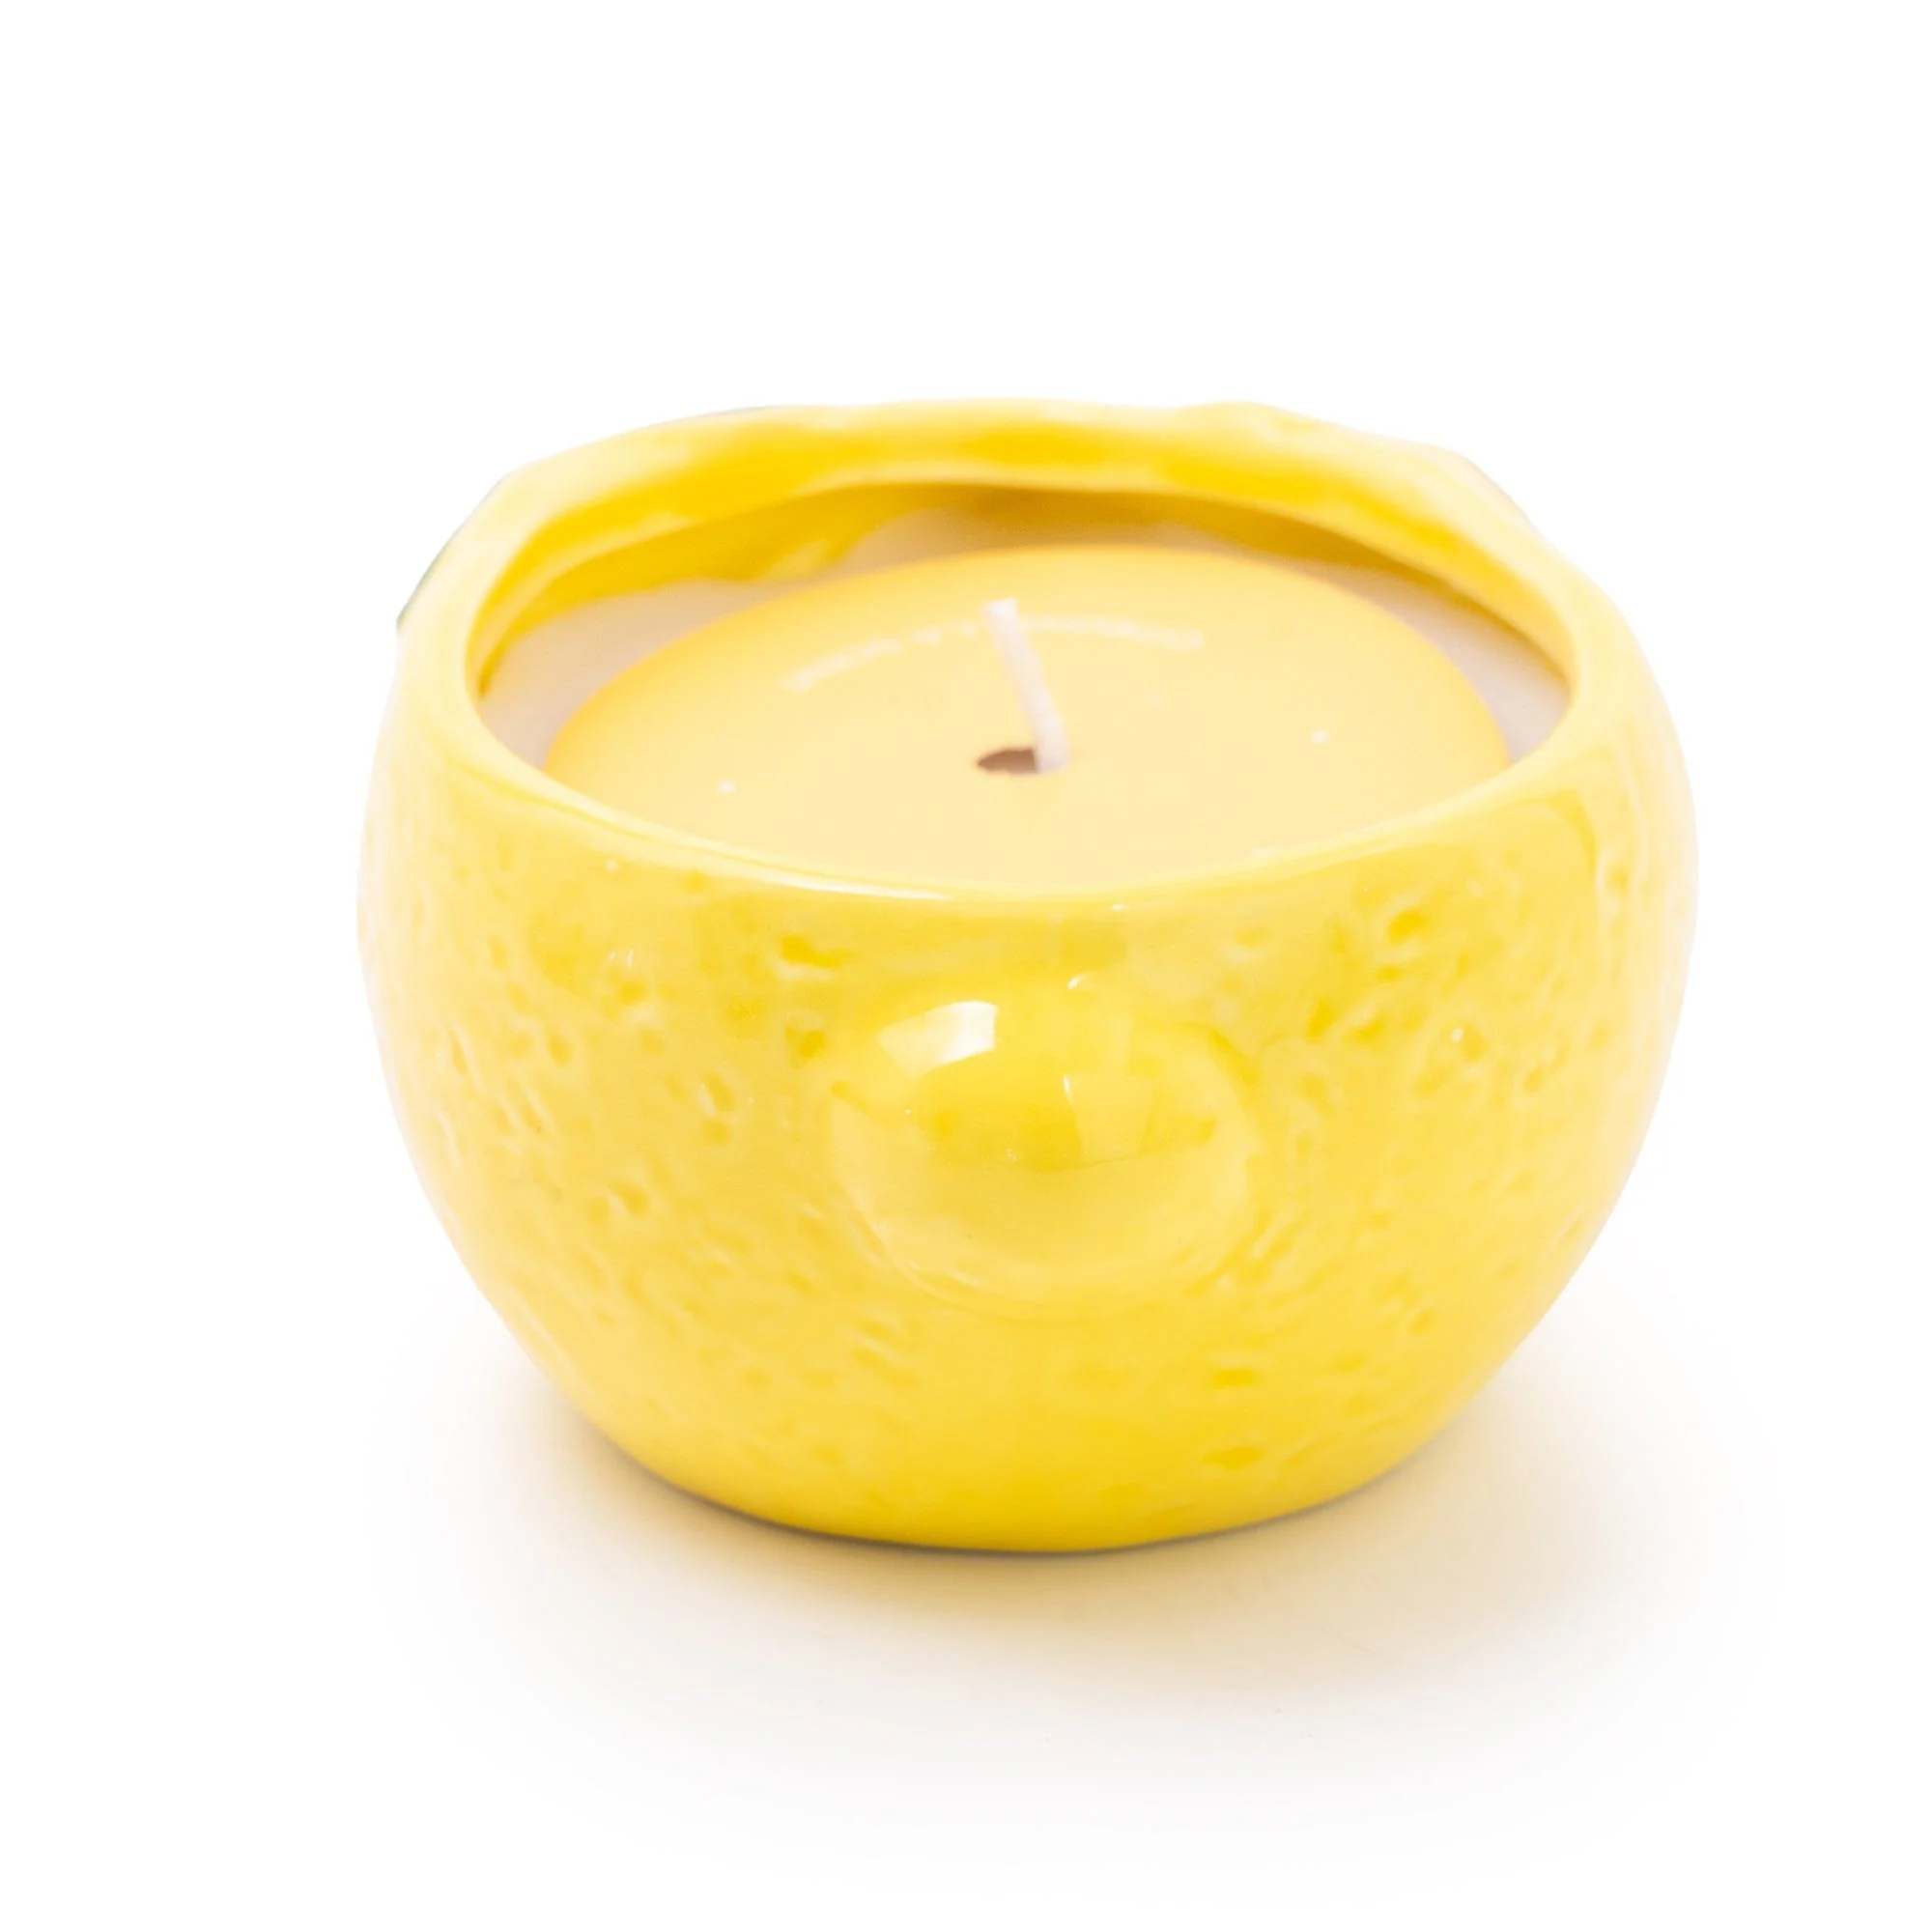 Lemon Ceramic Wax Filled Pot - Meditteranean Lemon Scent